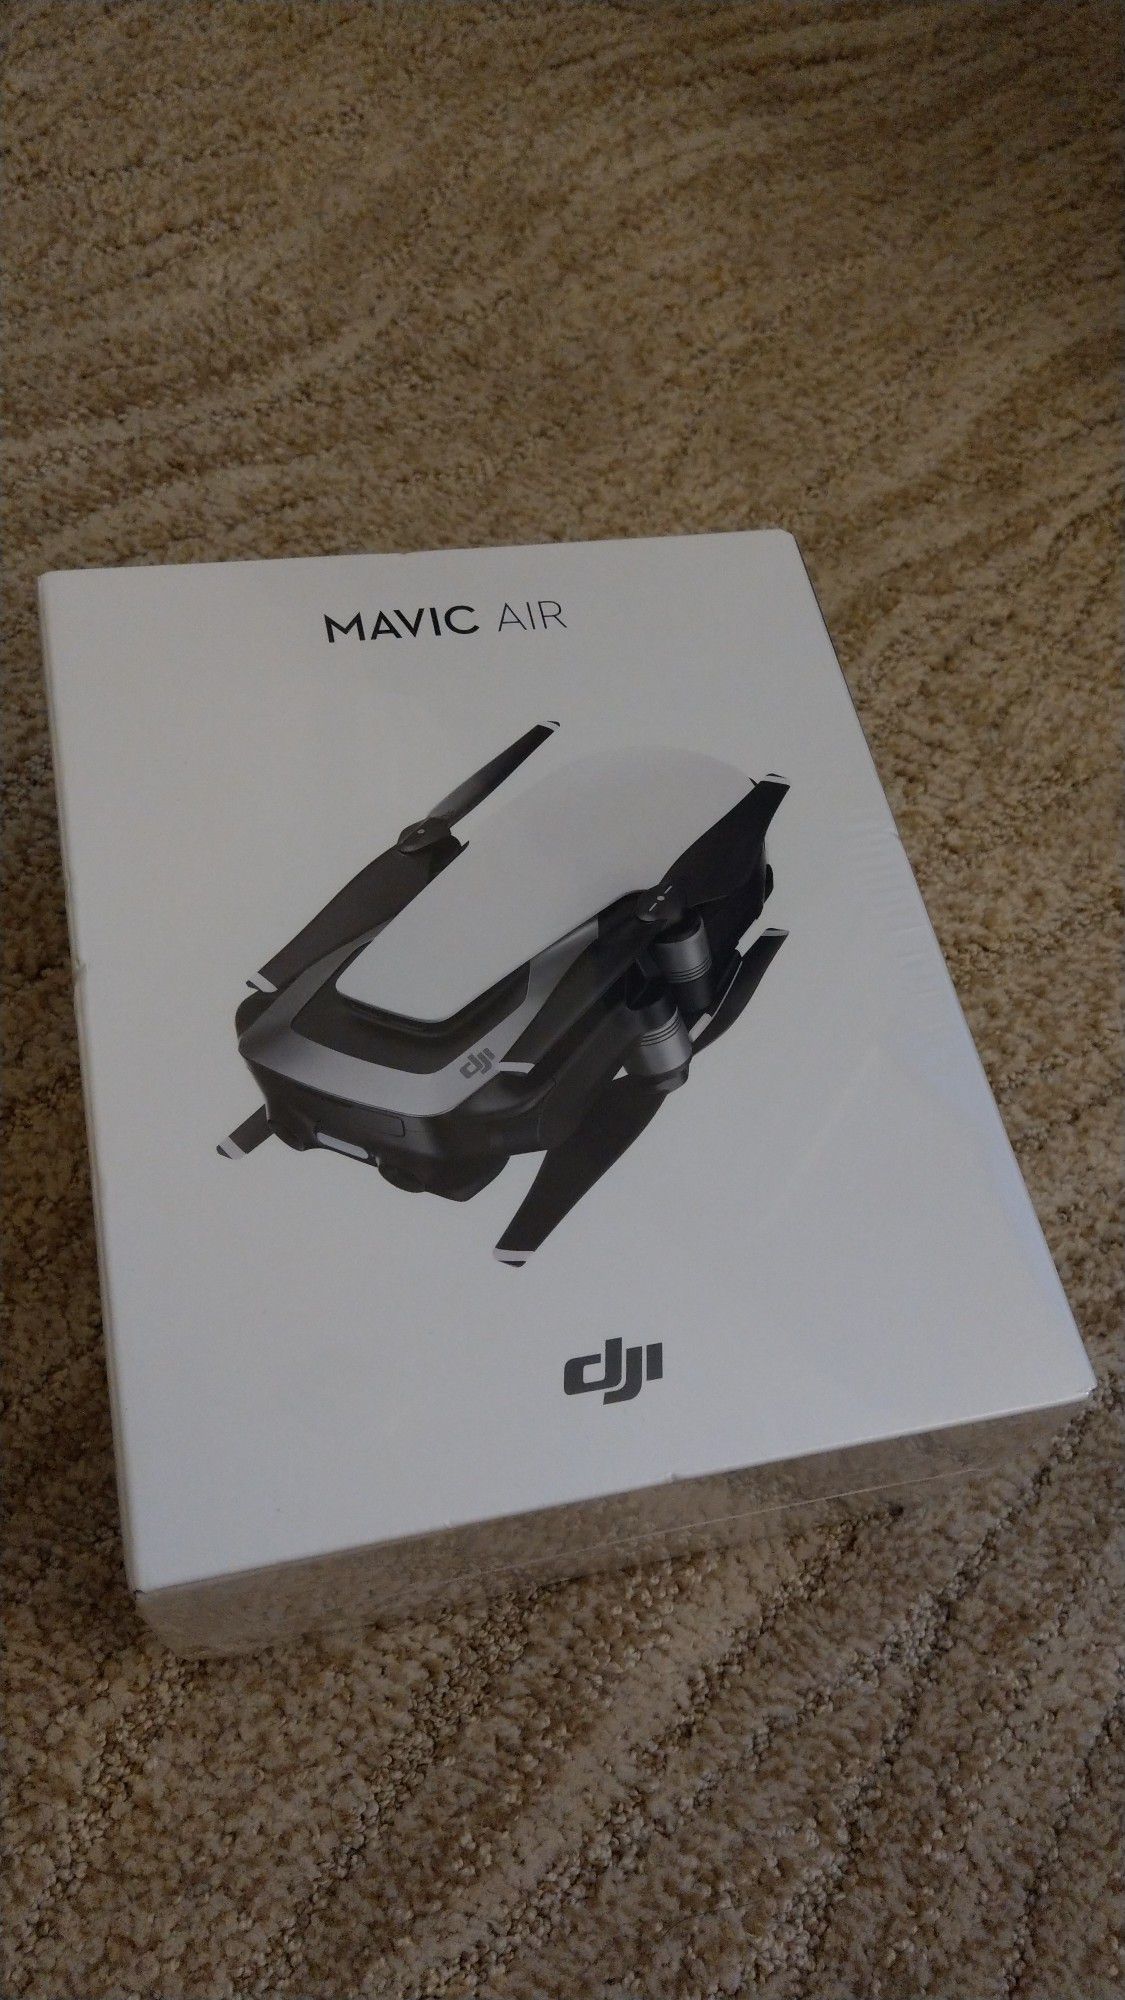 Brand NEW! Never opened Mavic Air drone black